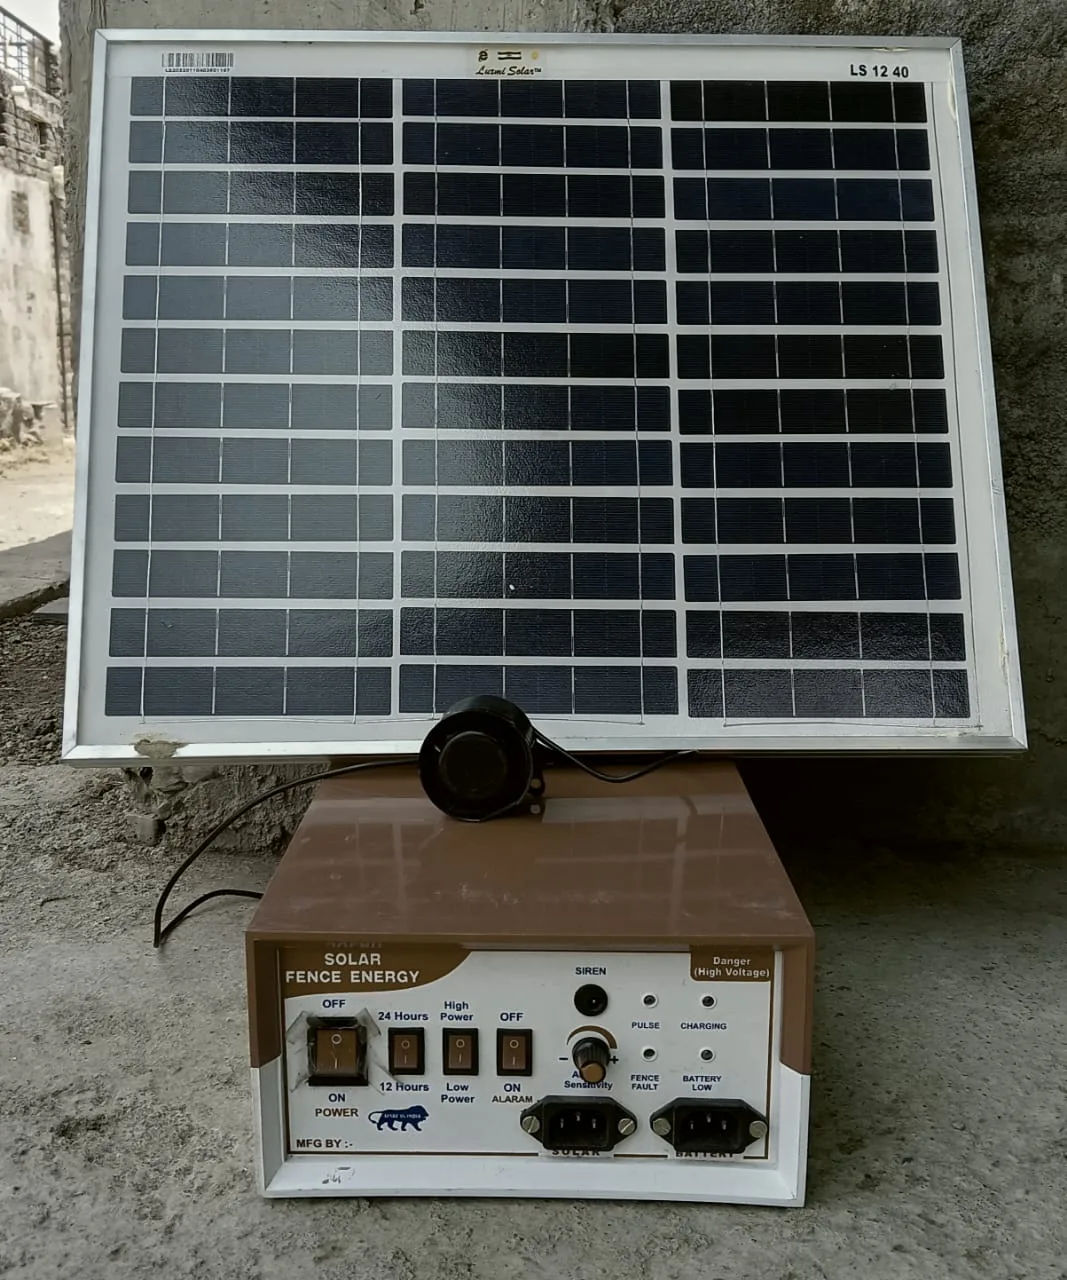 solar zataka machine kit